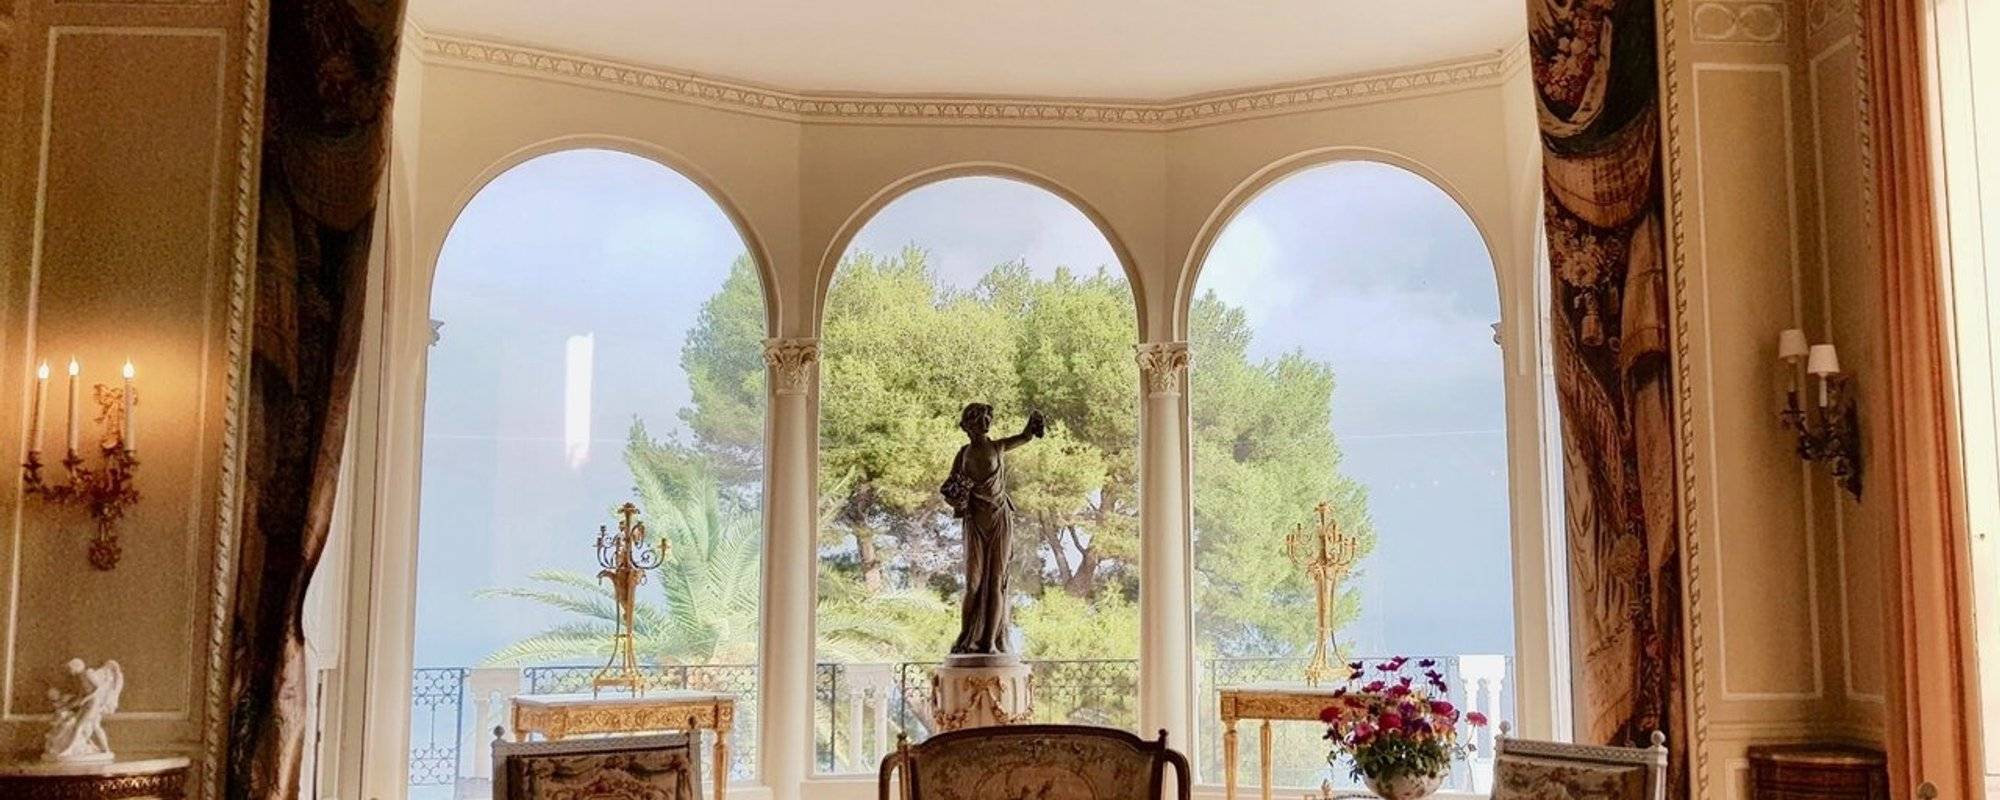 The magnificent villa & jardins Ephrussi de Rothschild - The Villa pt.3 (Provence, France)